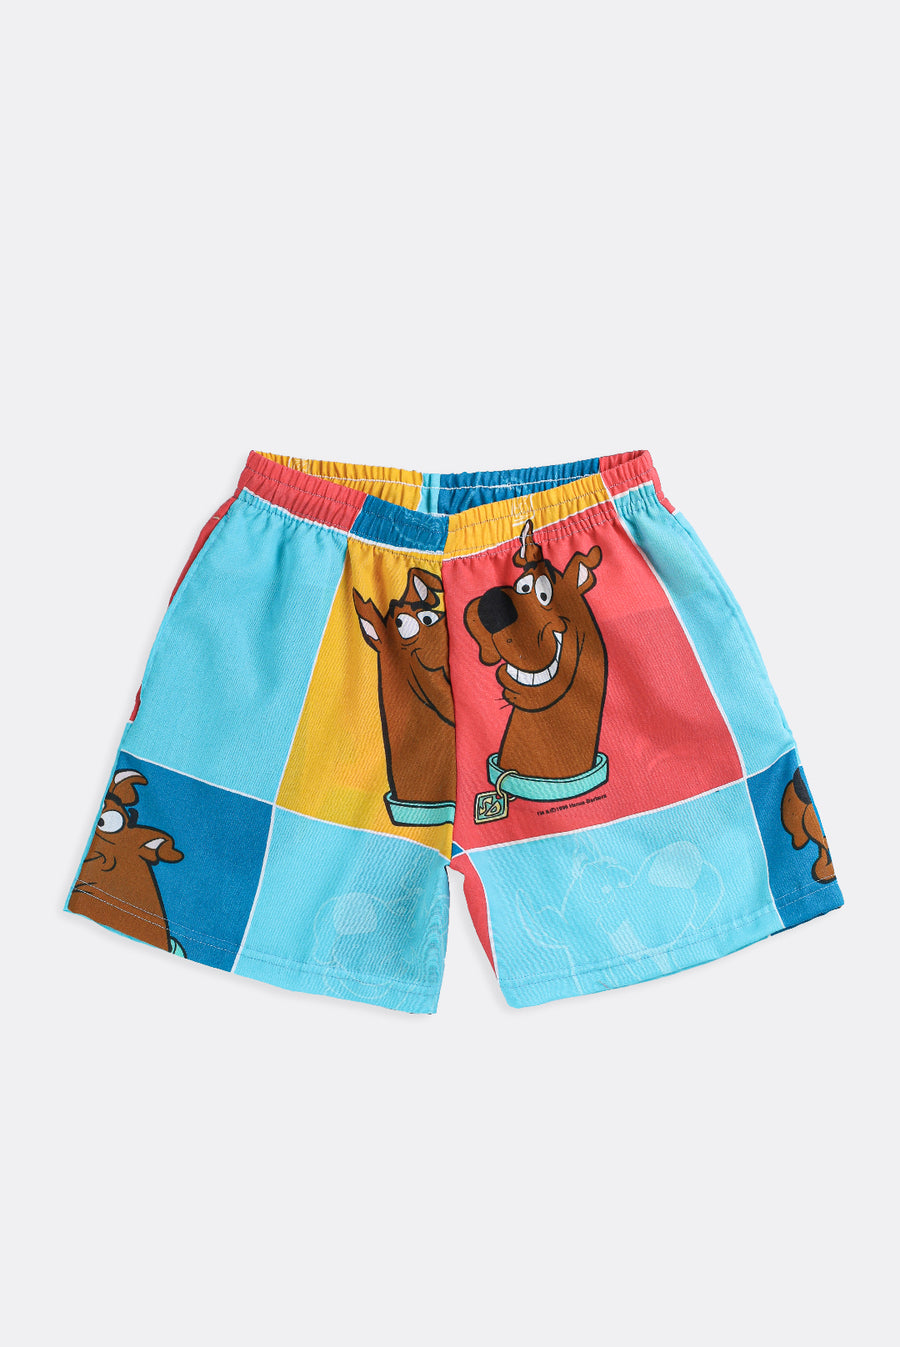 Unisex Rework Scooby Doo Boxer Shorts - XS, S